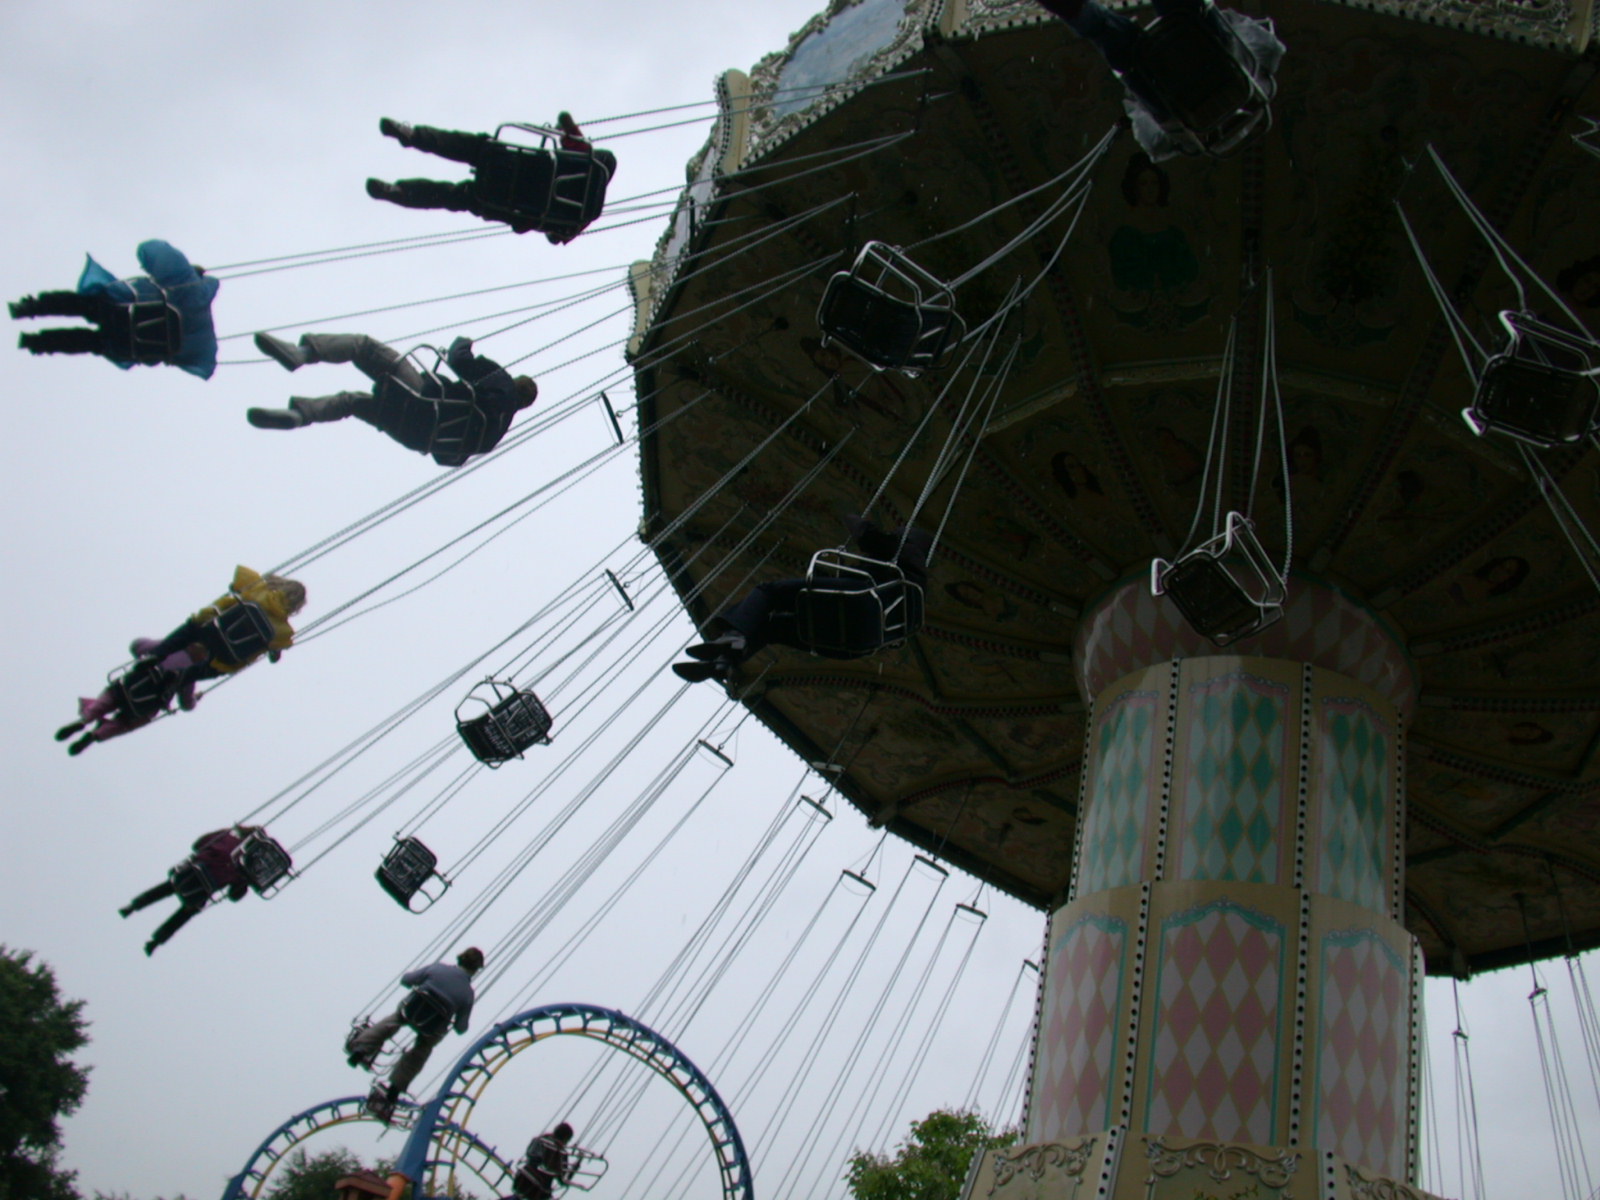 swing fair funfair around round and round swings mill speed children fun